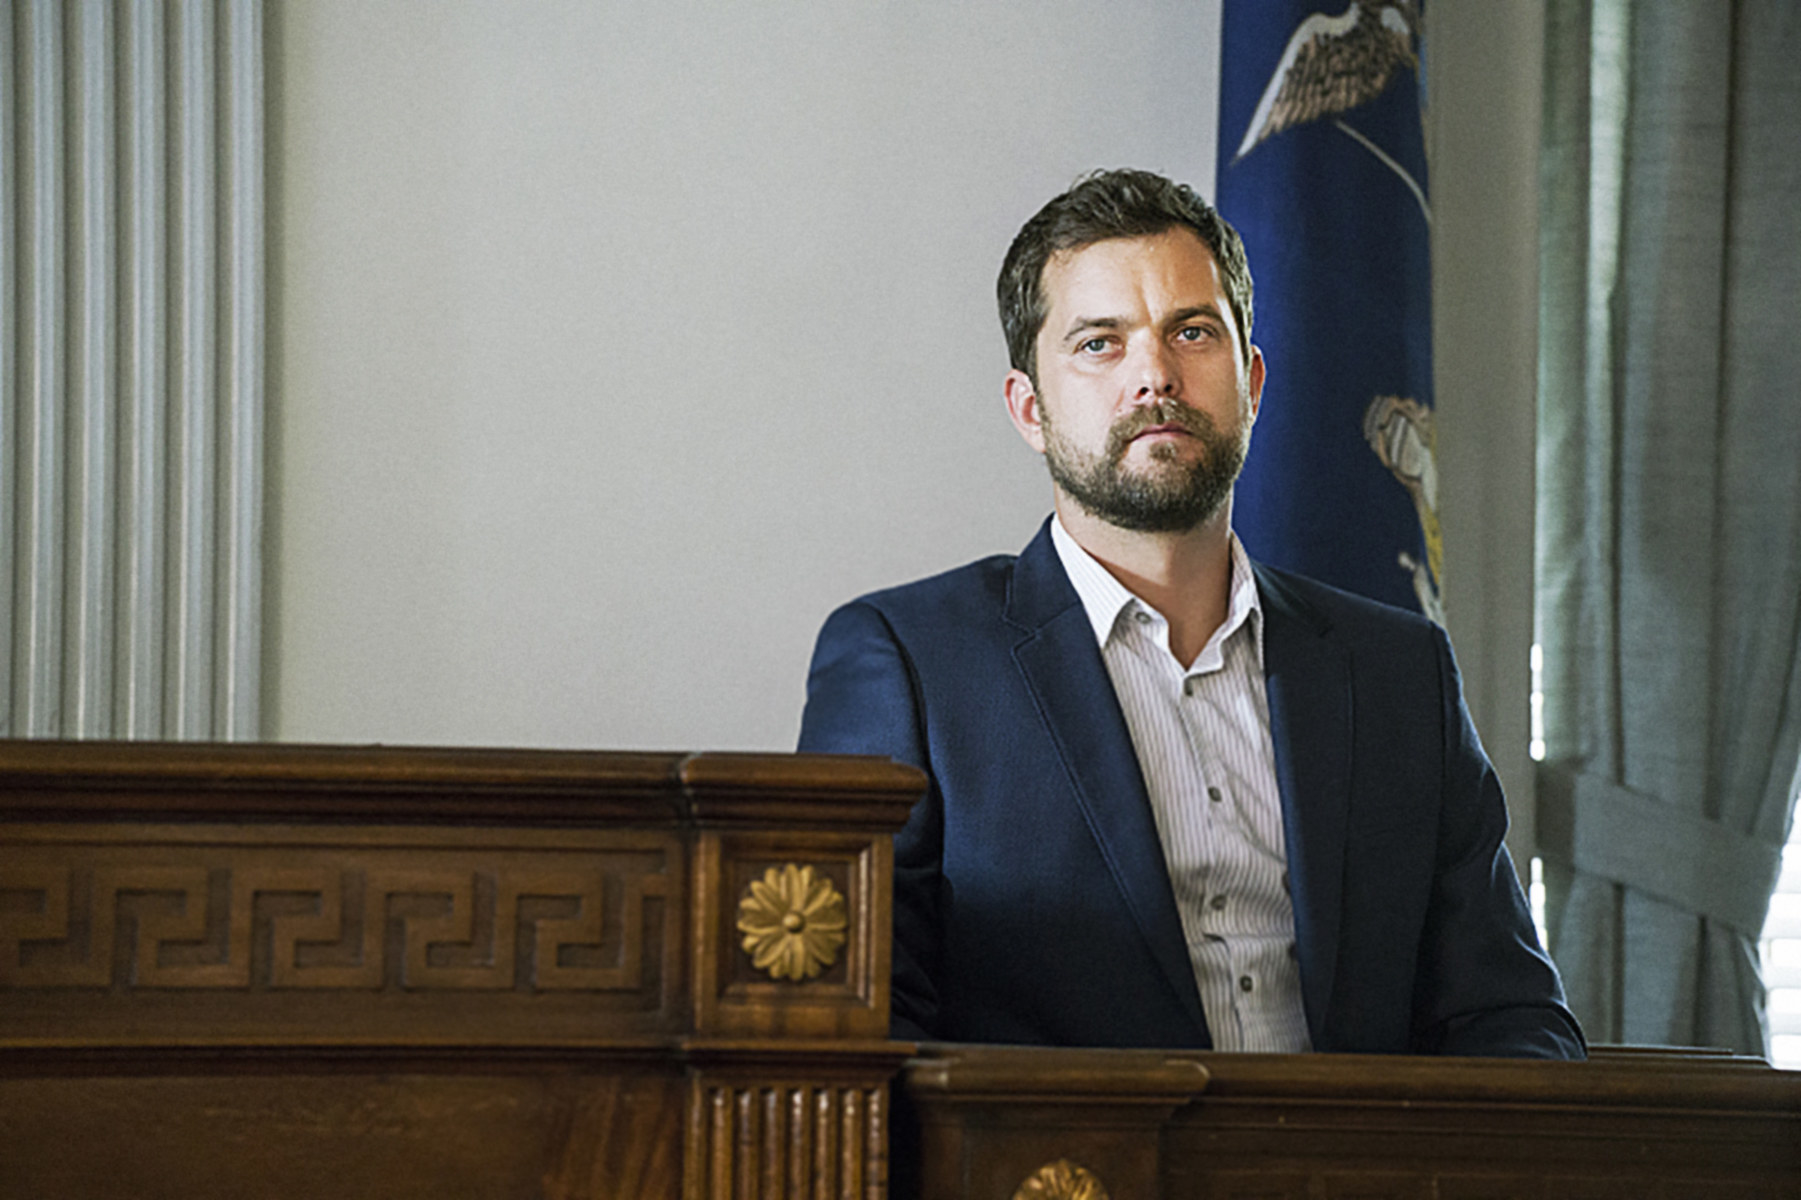 Joshua in a courtroom scene